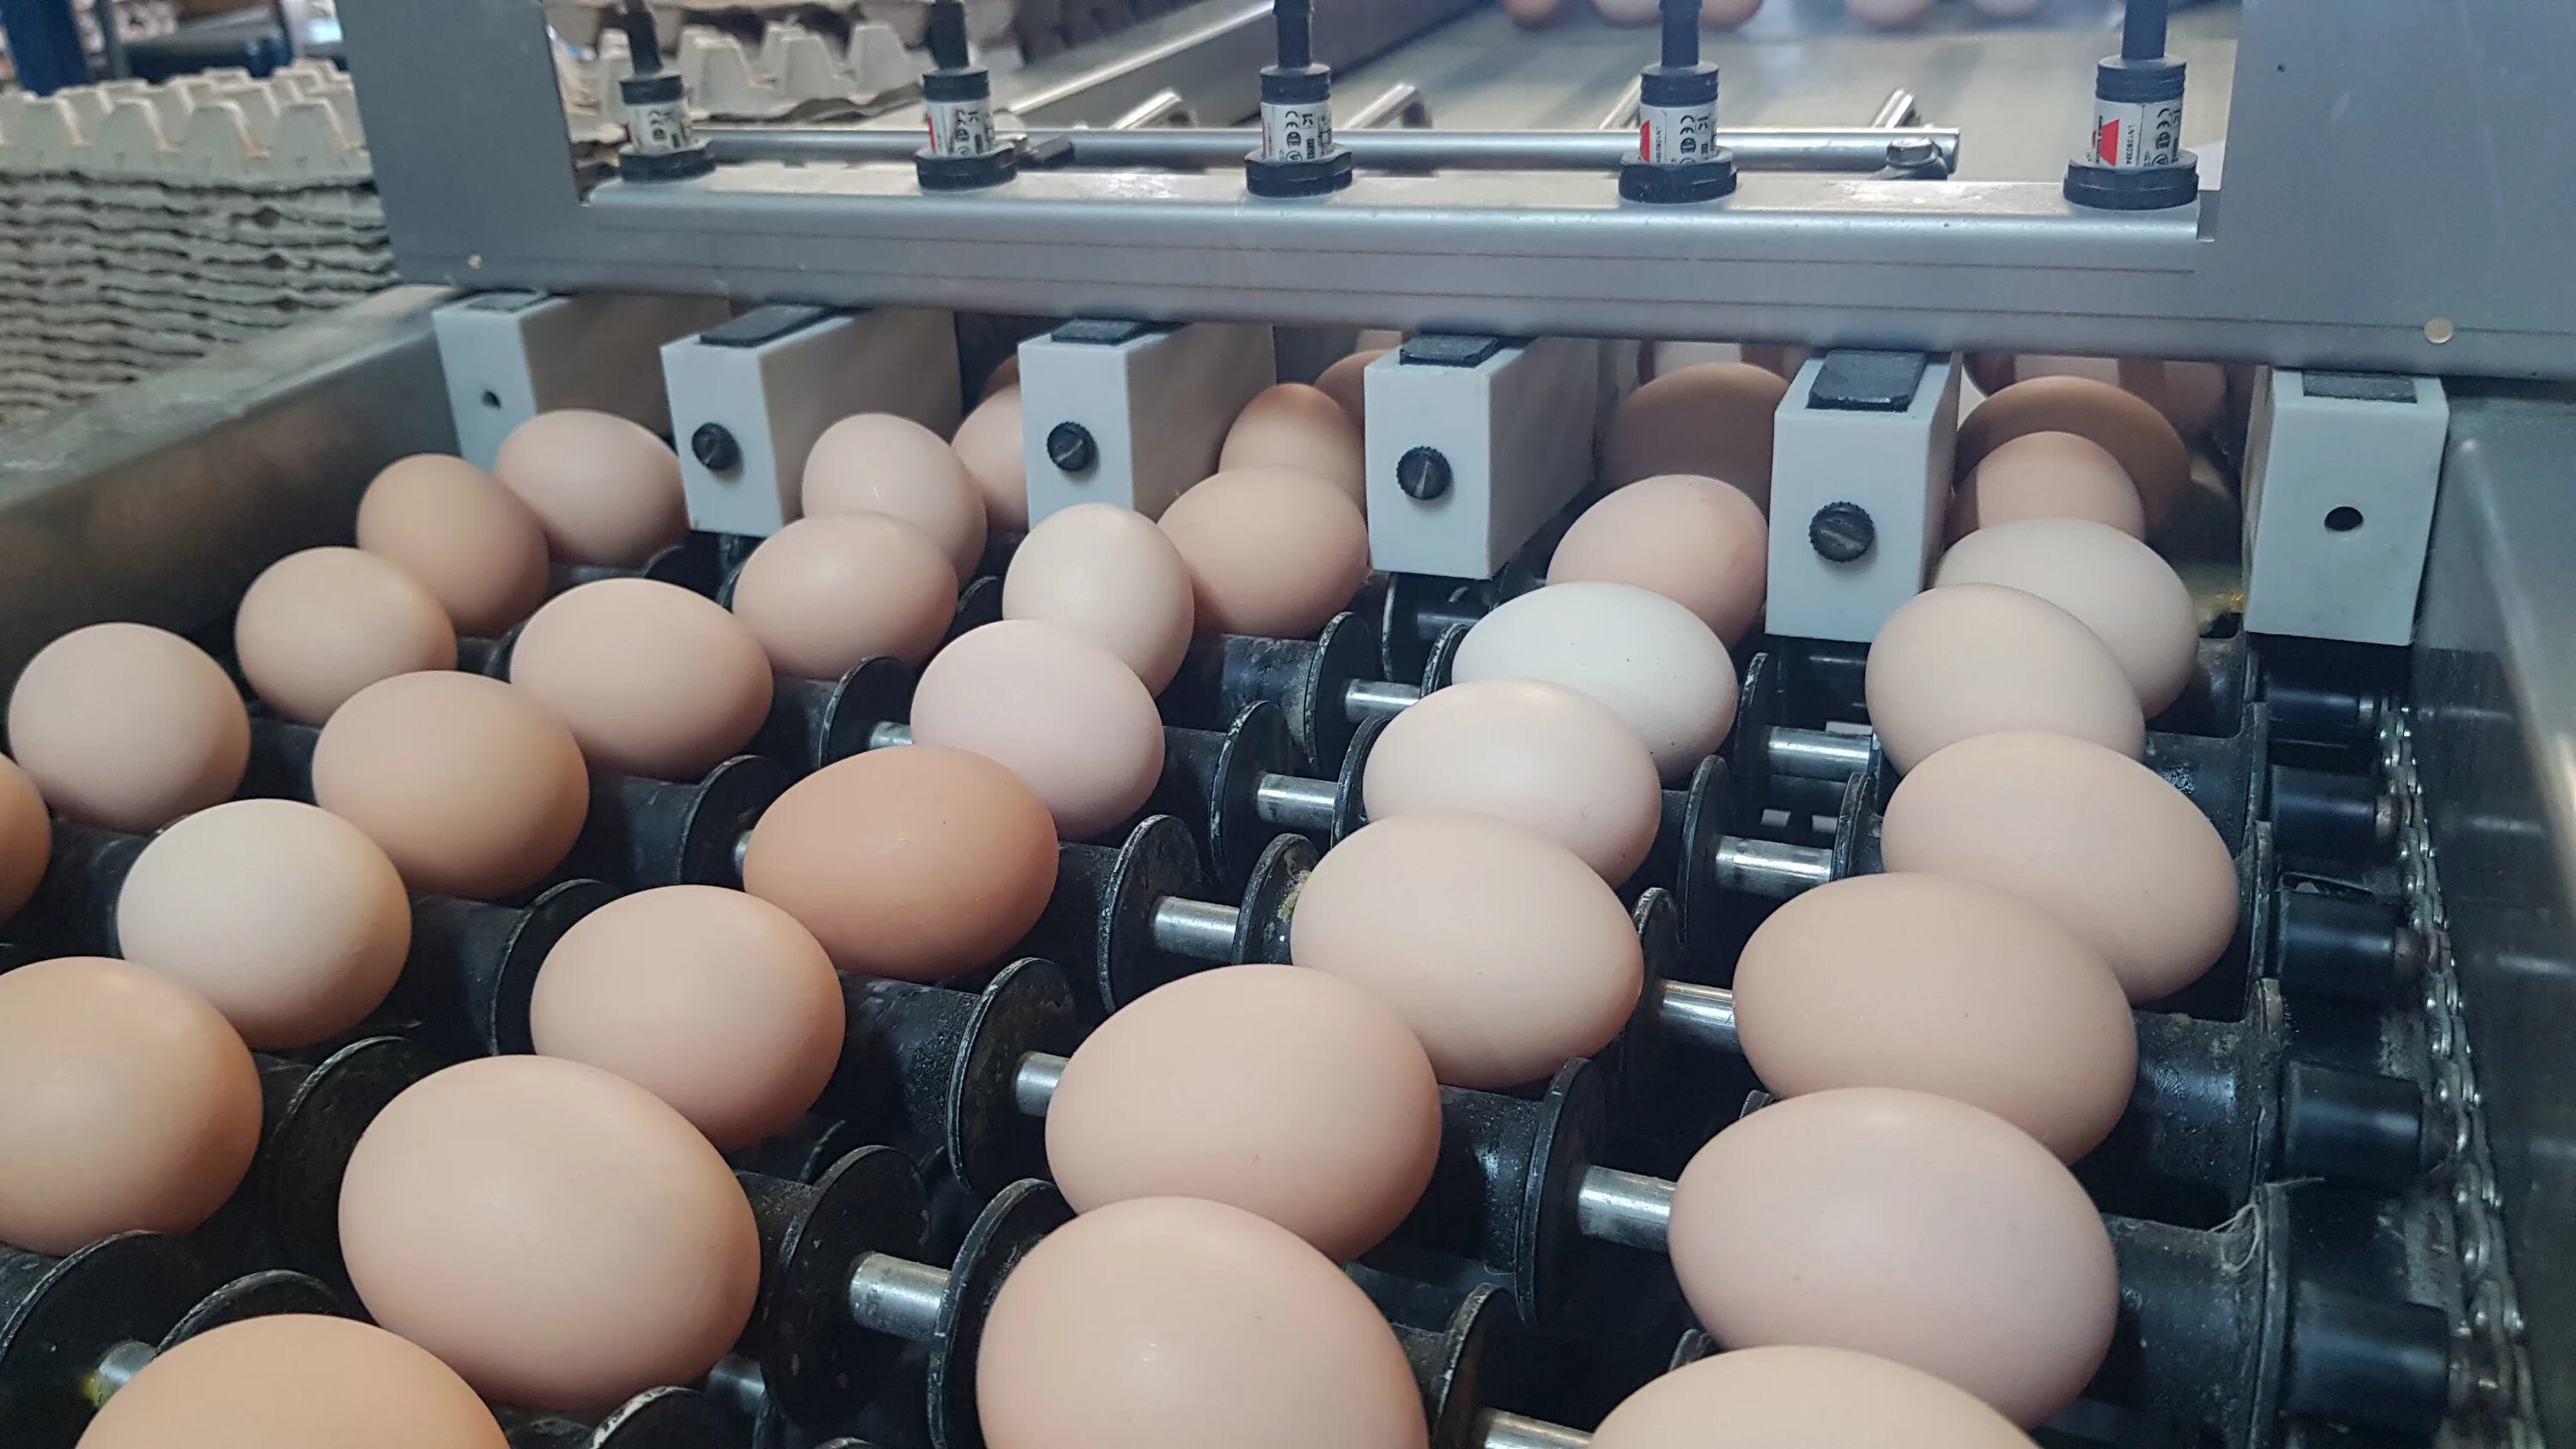 Птицефабрика островная Южно-Сахалинск. Яйца производители. Производство яиц. Птицефабрика островная. Купить яйца в ленинградской